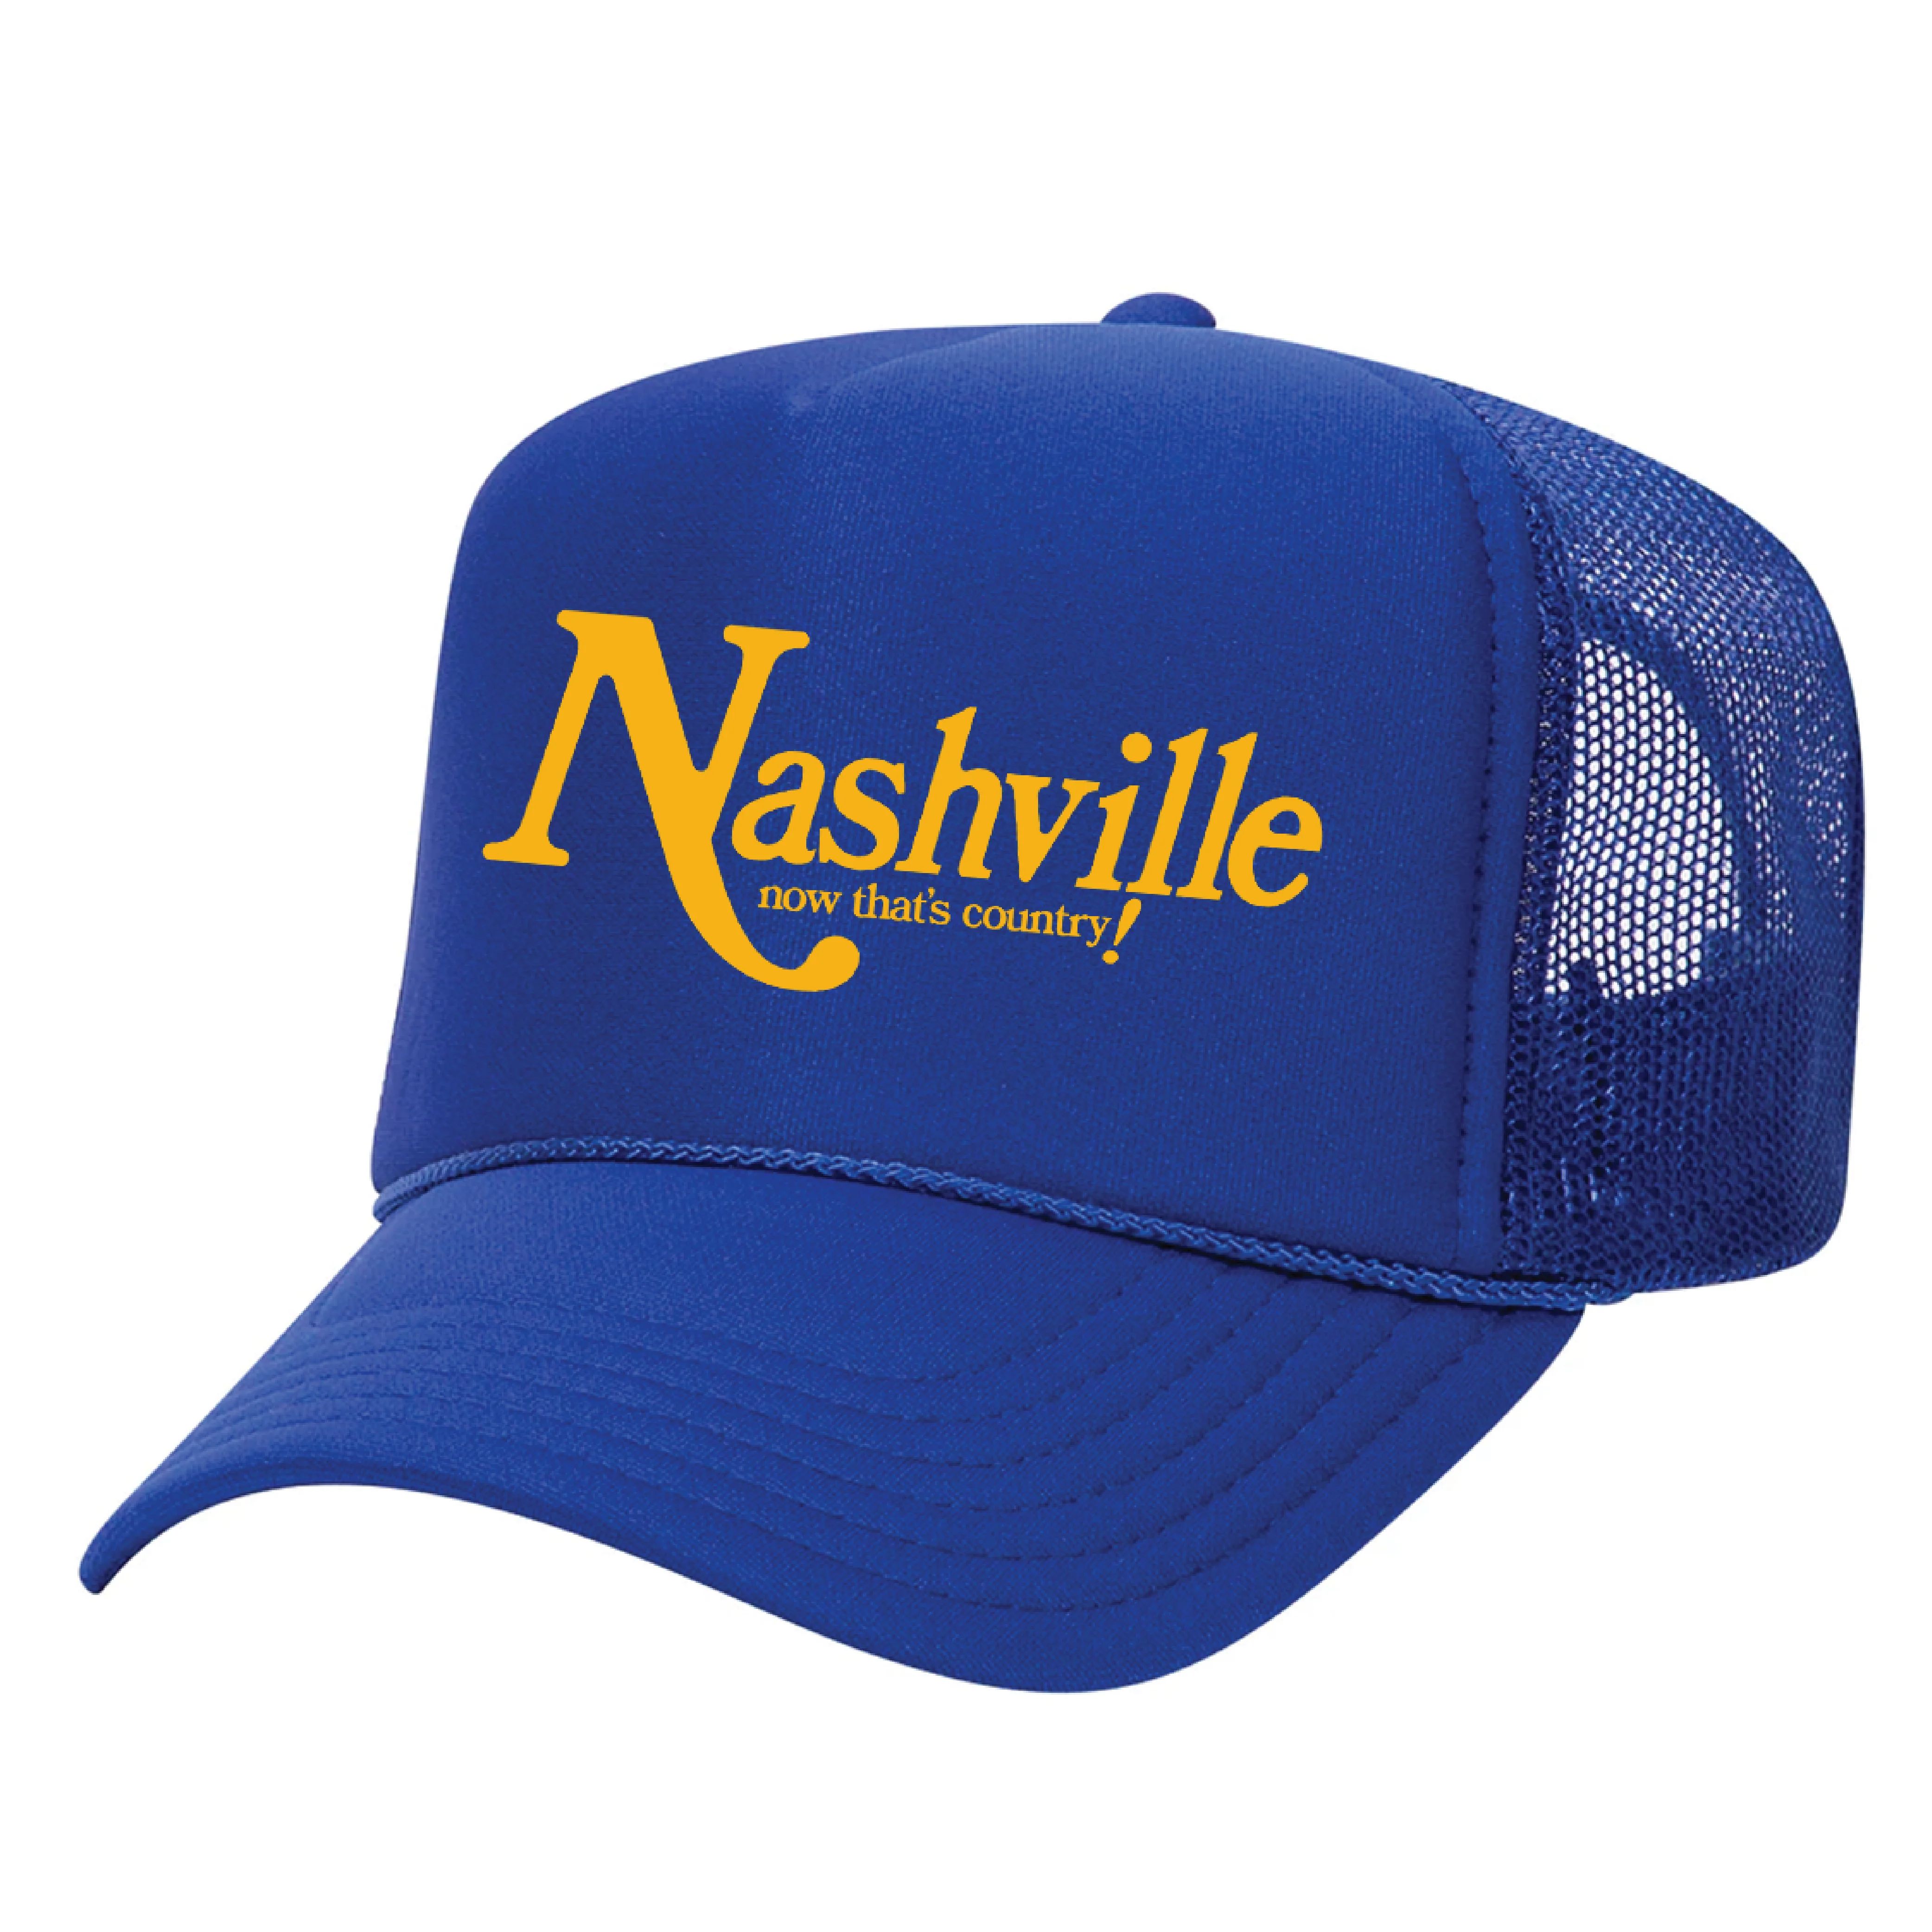 Nashville! Now That's Country Trucker Hat Blue | Premonition Goods